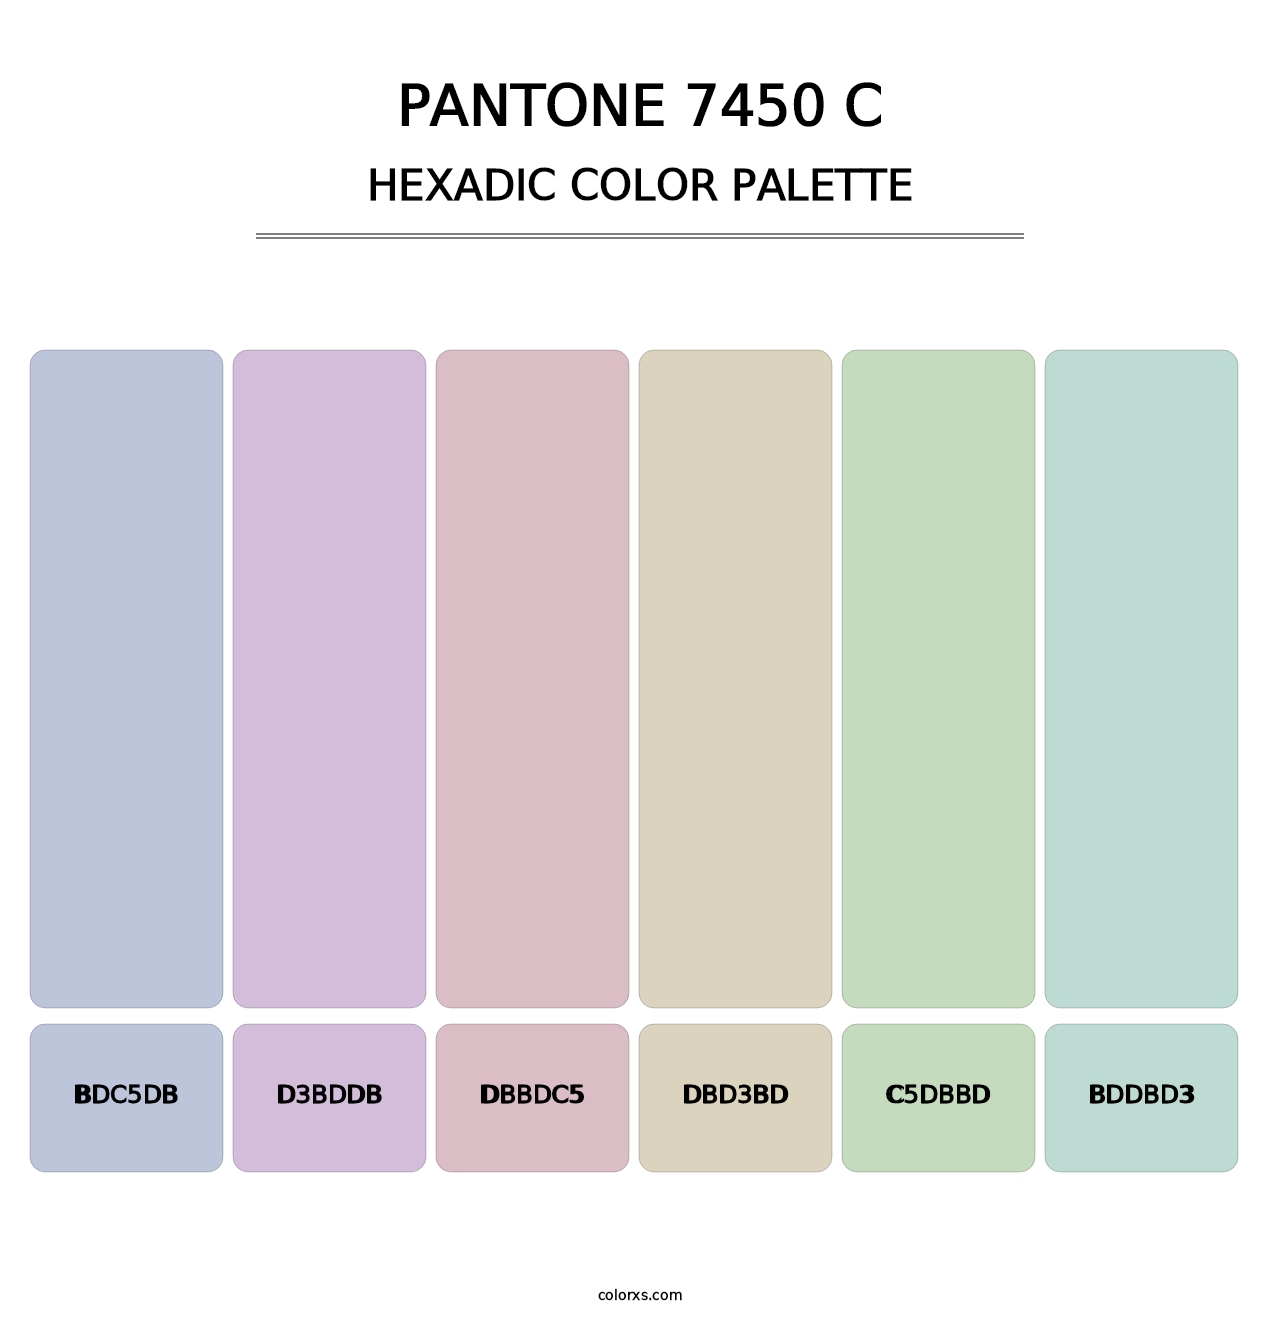 PANTONE 7450 C - Hexadic Color Palette